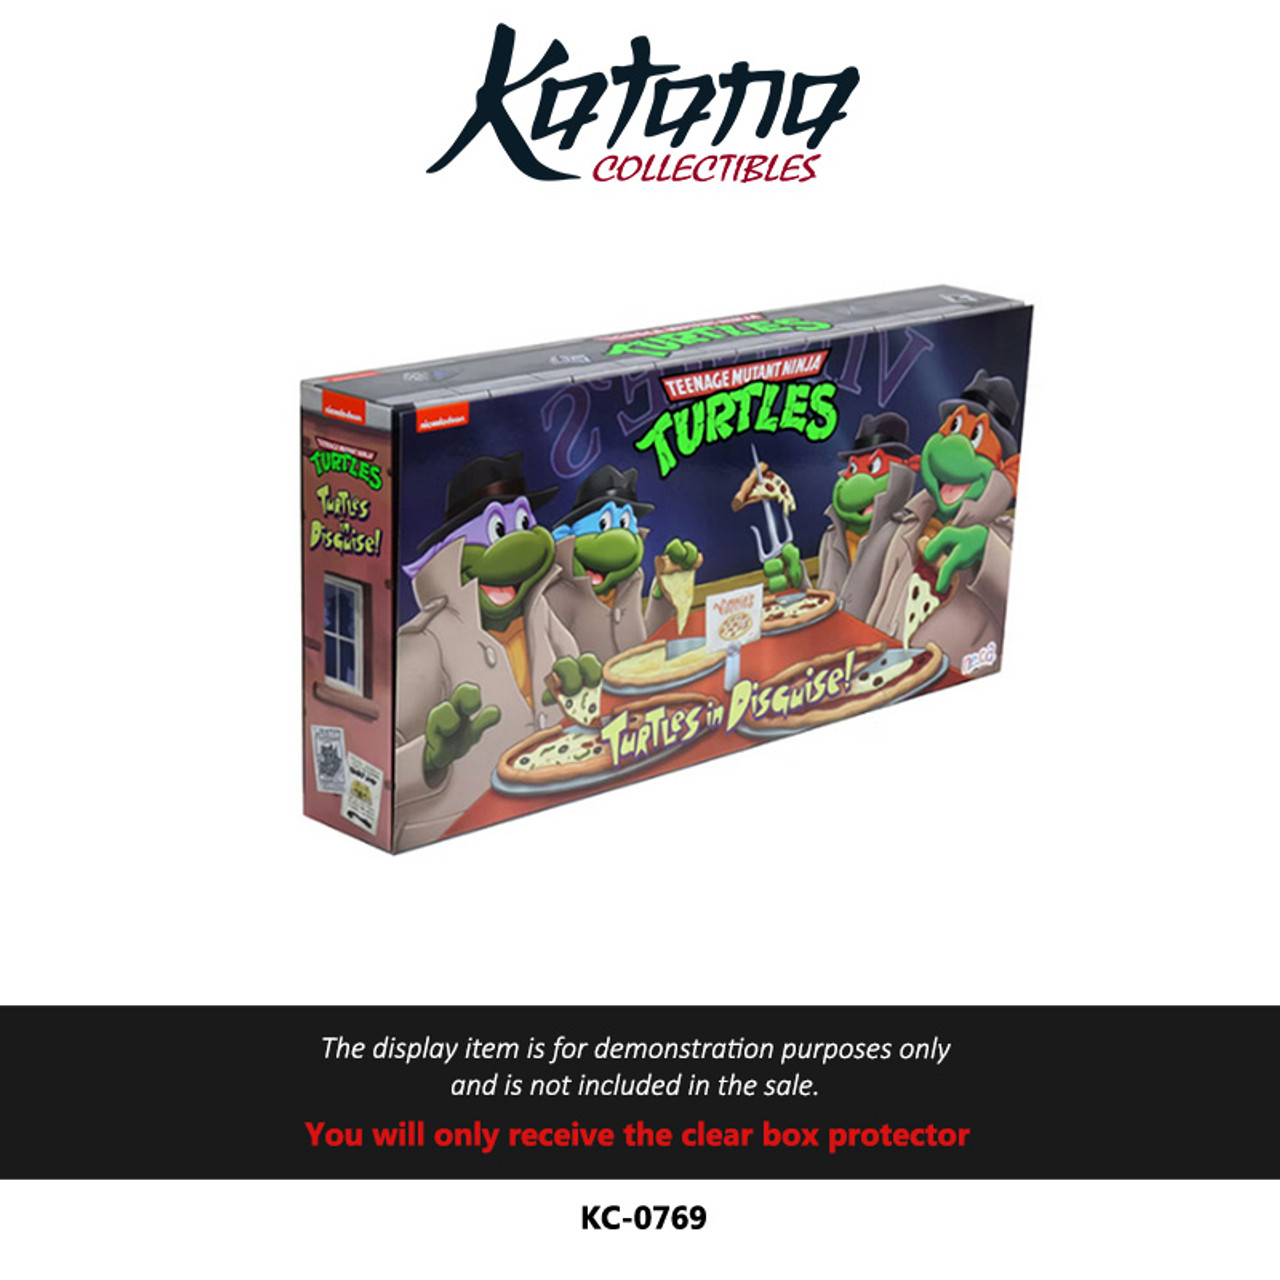 Katana Collectibles Protector For NECA Teenage Mutant Ninja Turtles Turtles in Disguise 4-Pack Figures